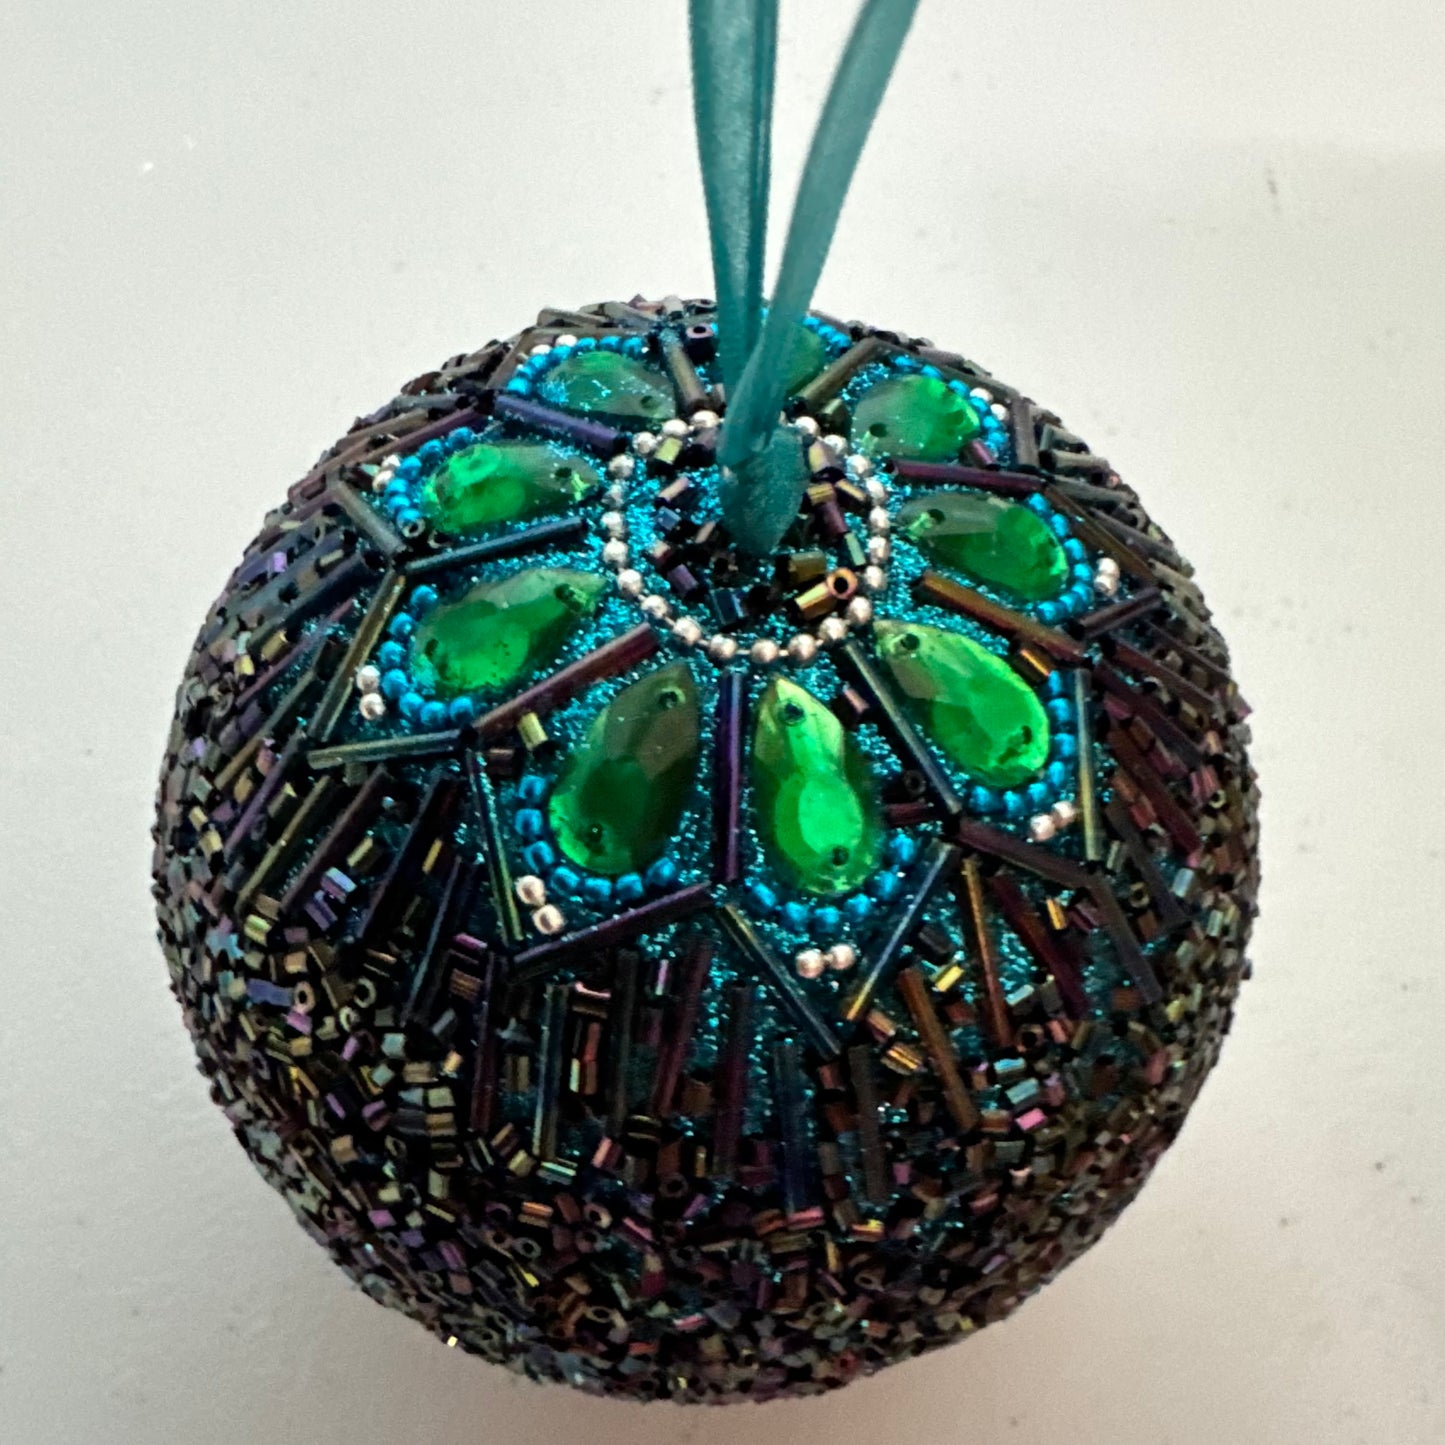 4" Beaded Peacock Ball Ornament